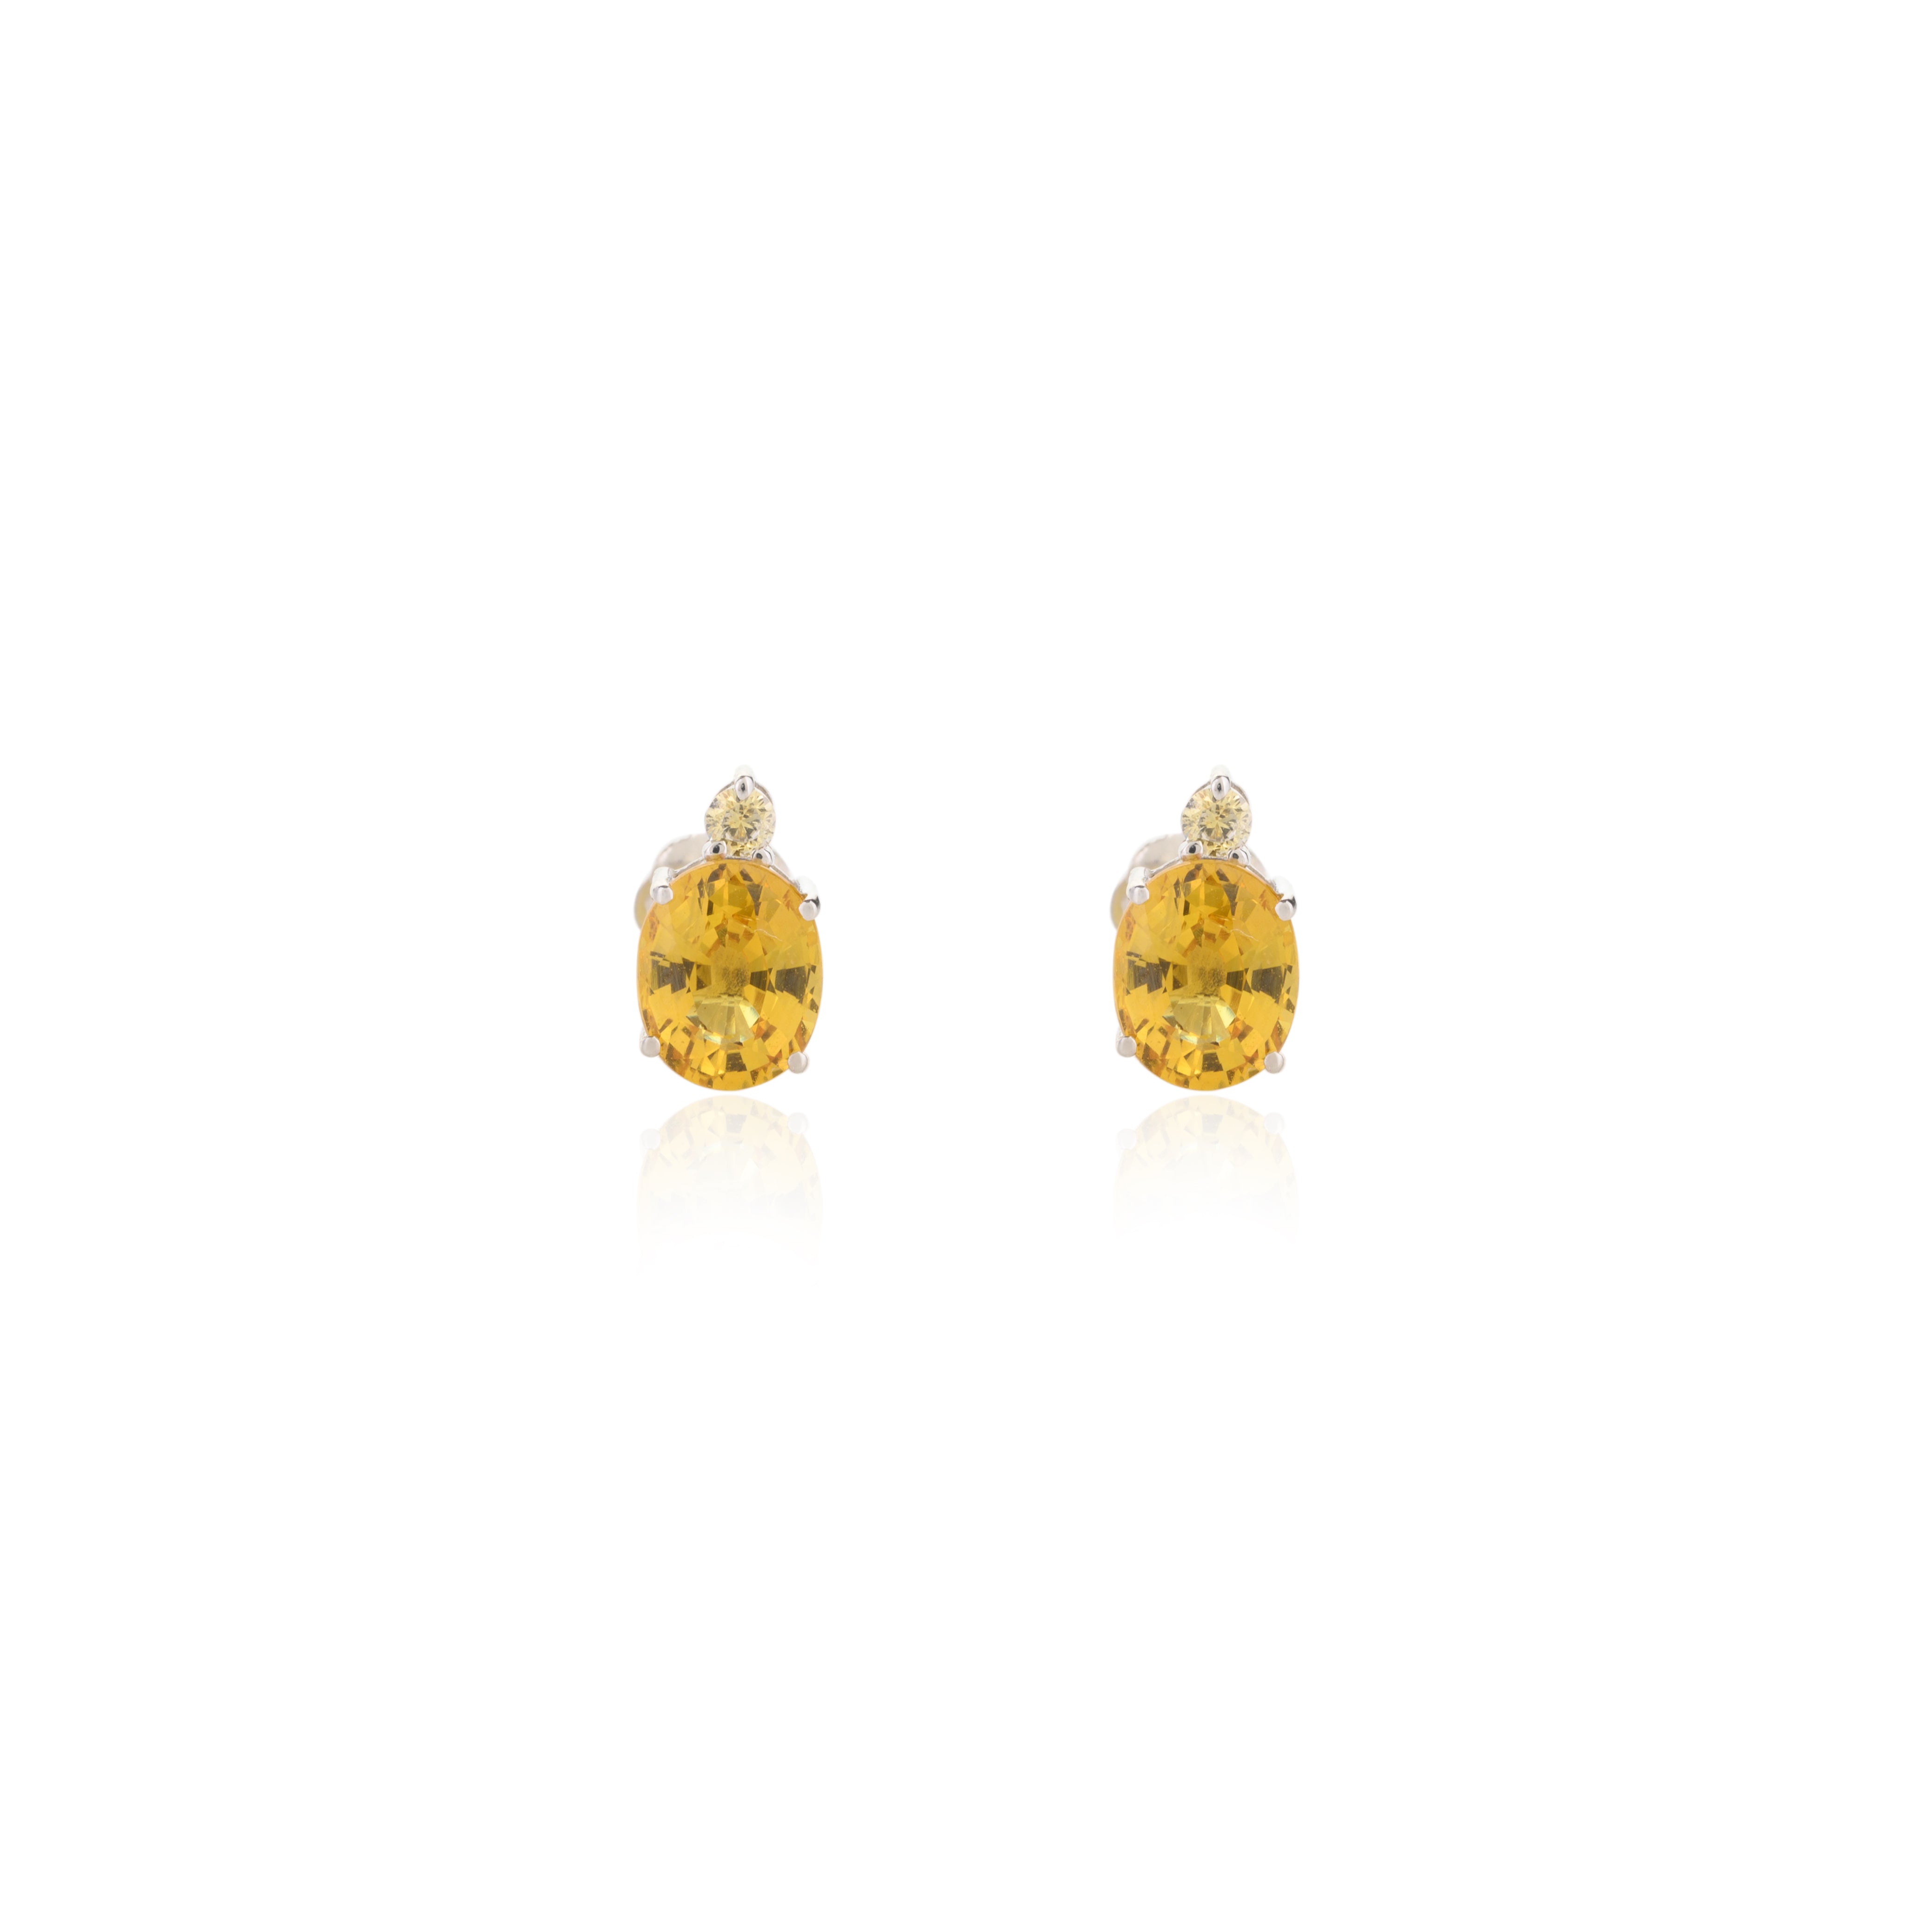 White Gold Yellow Sapphire Combo Jewelry Set